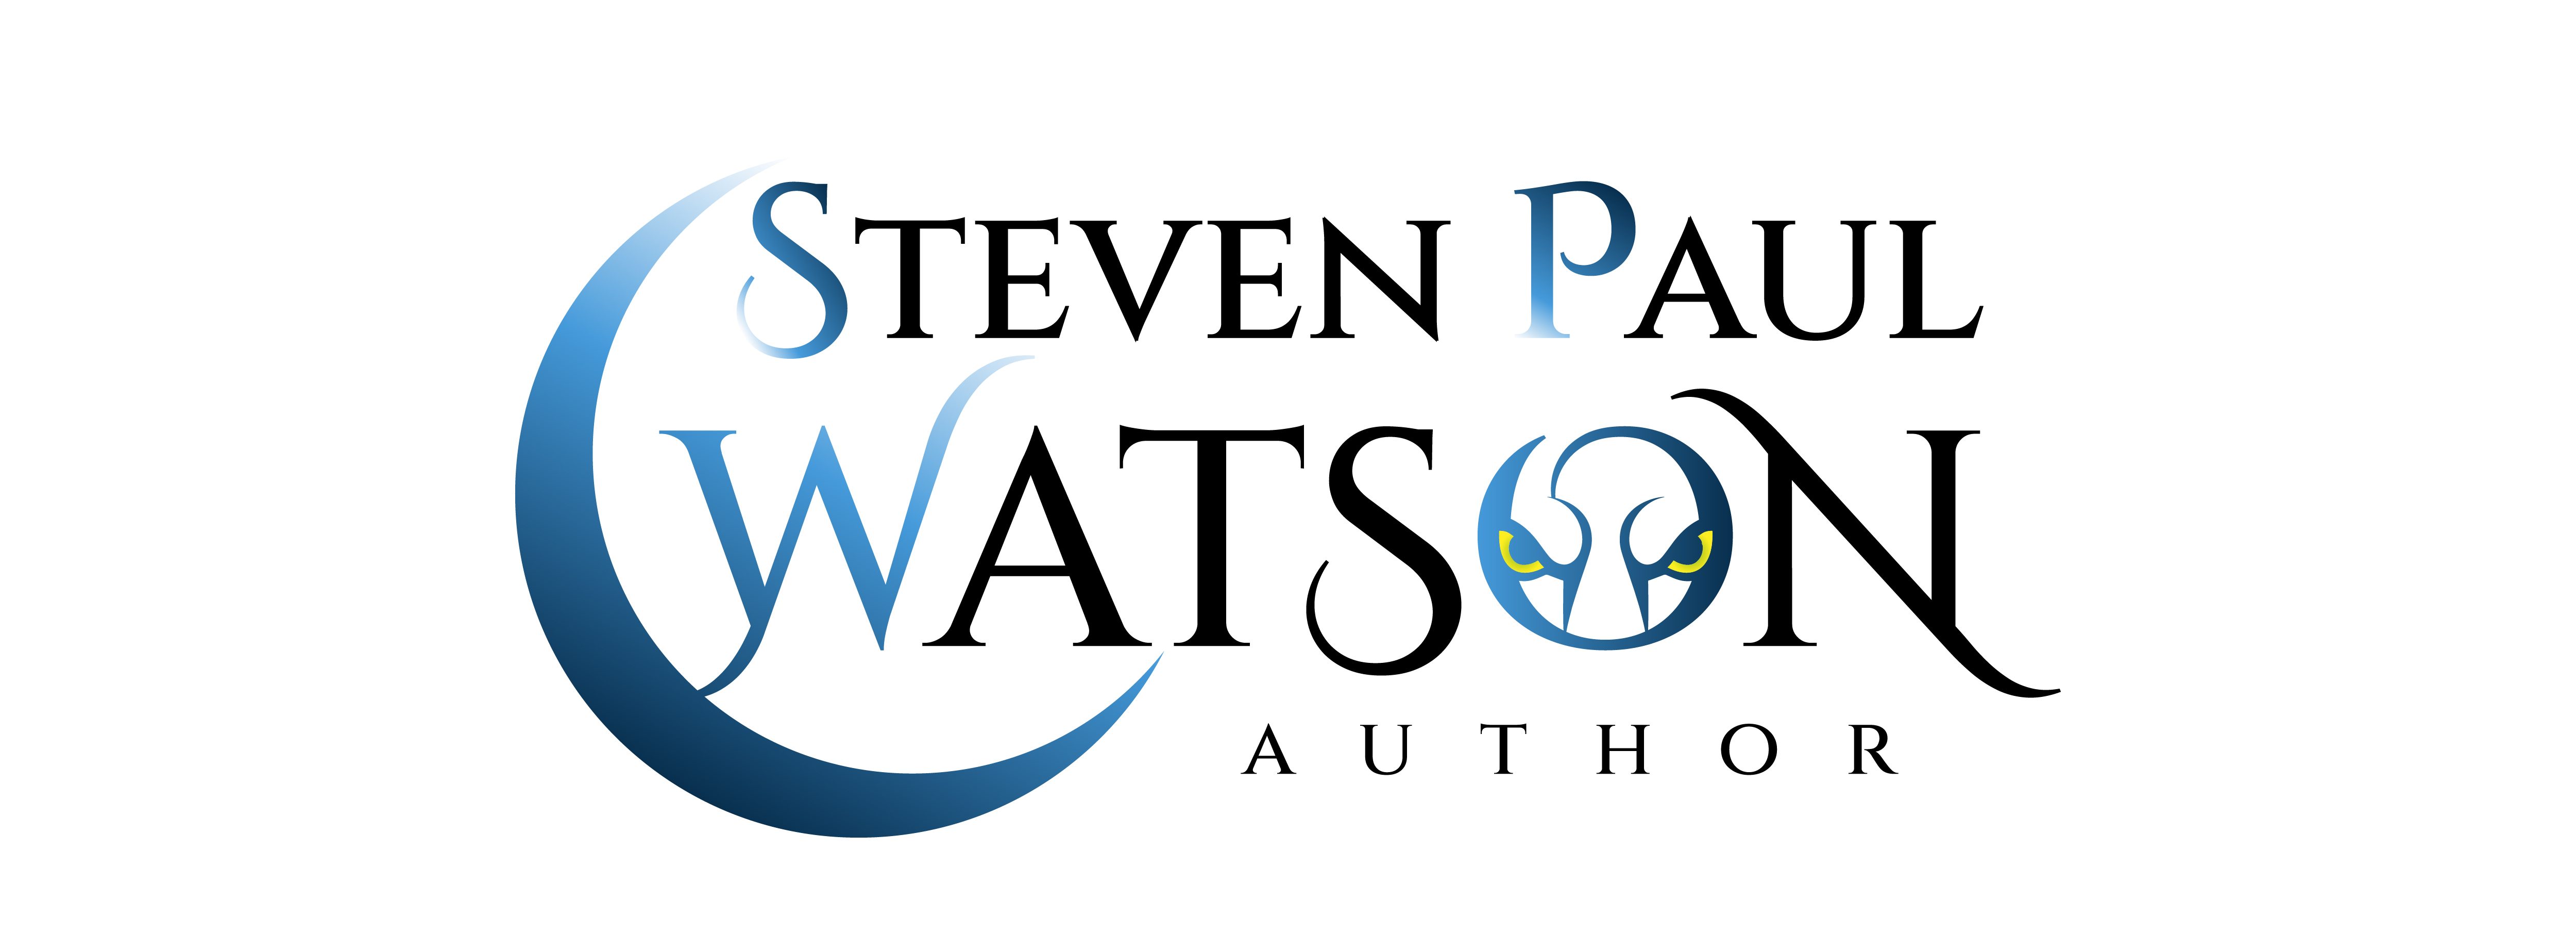 Steven Paul Watson, Author